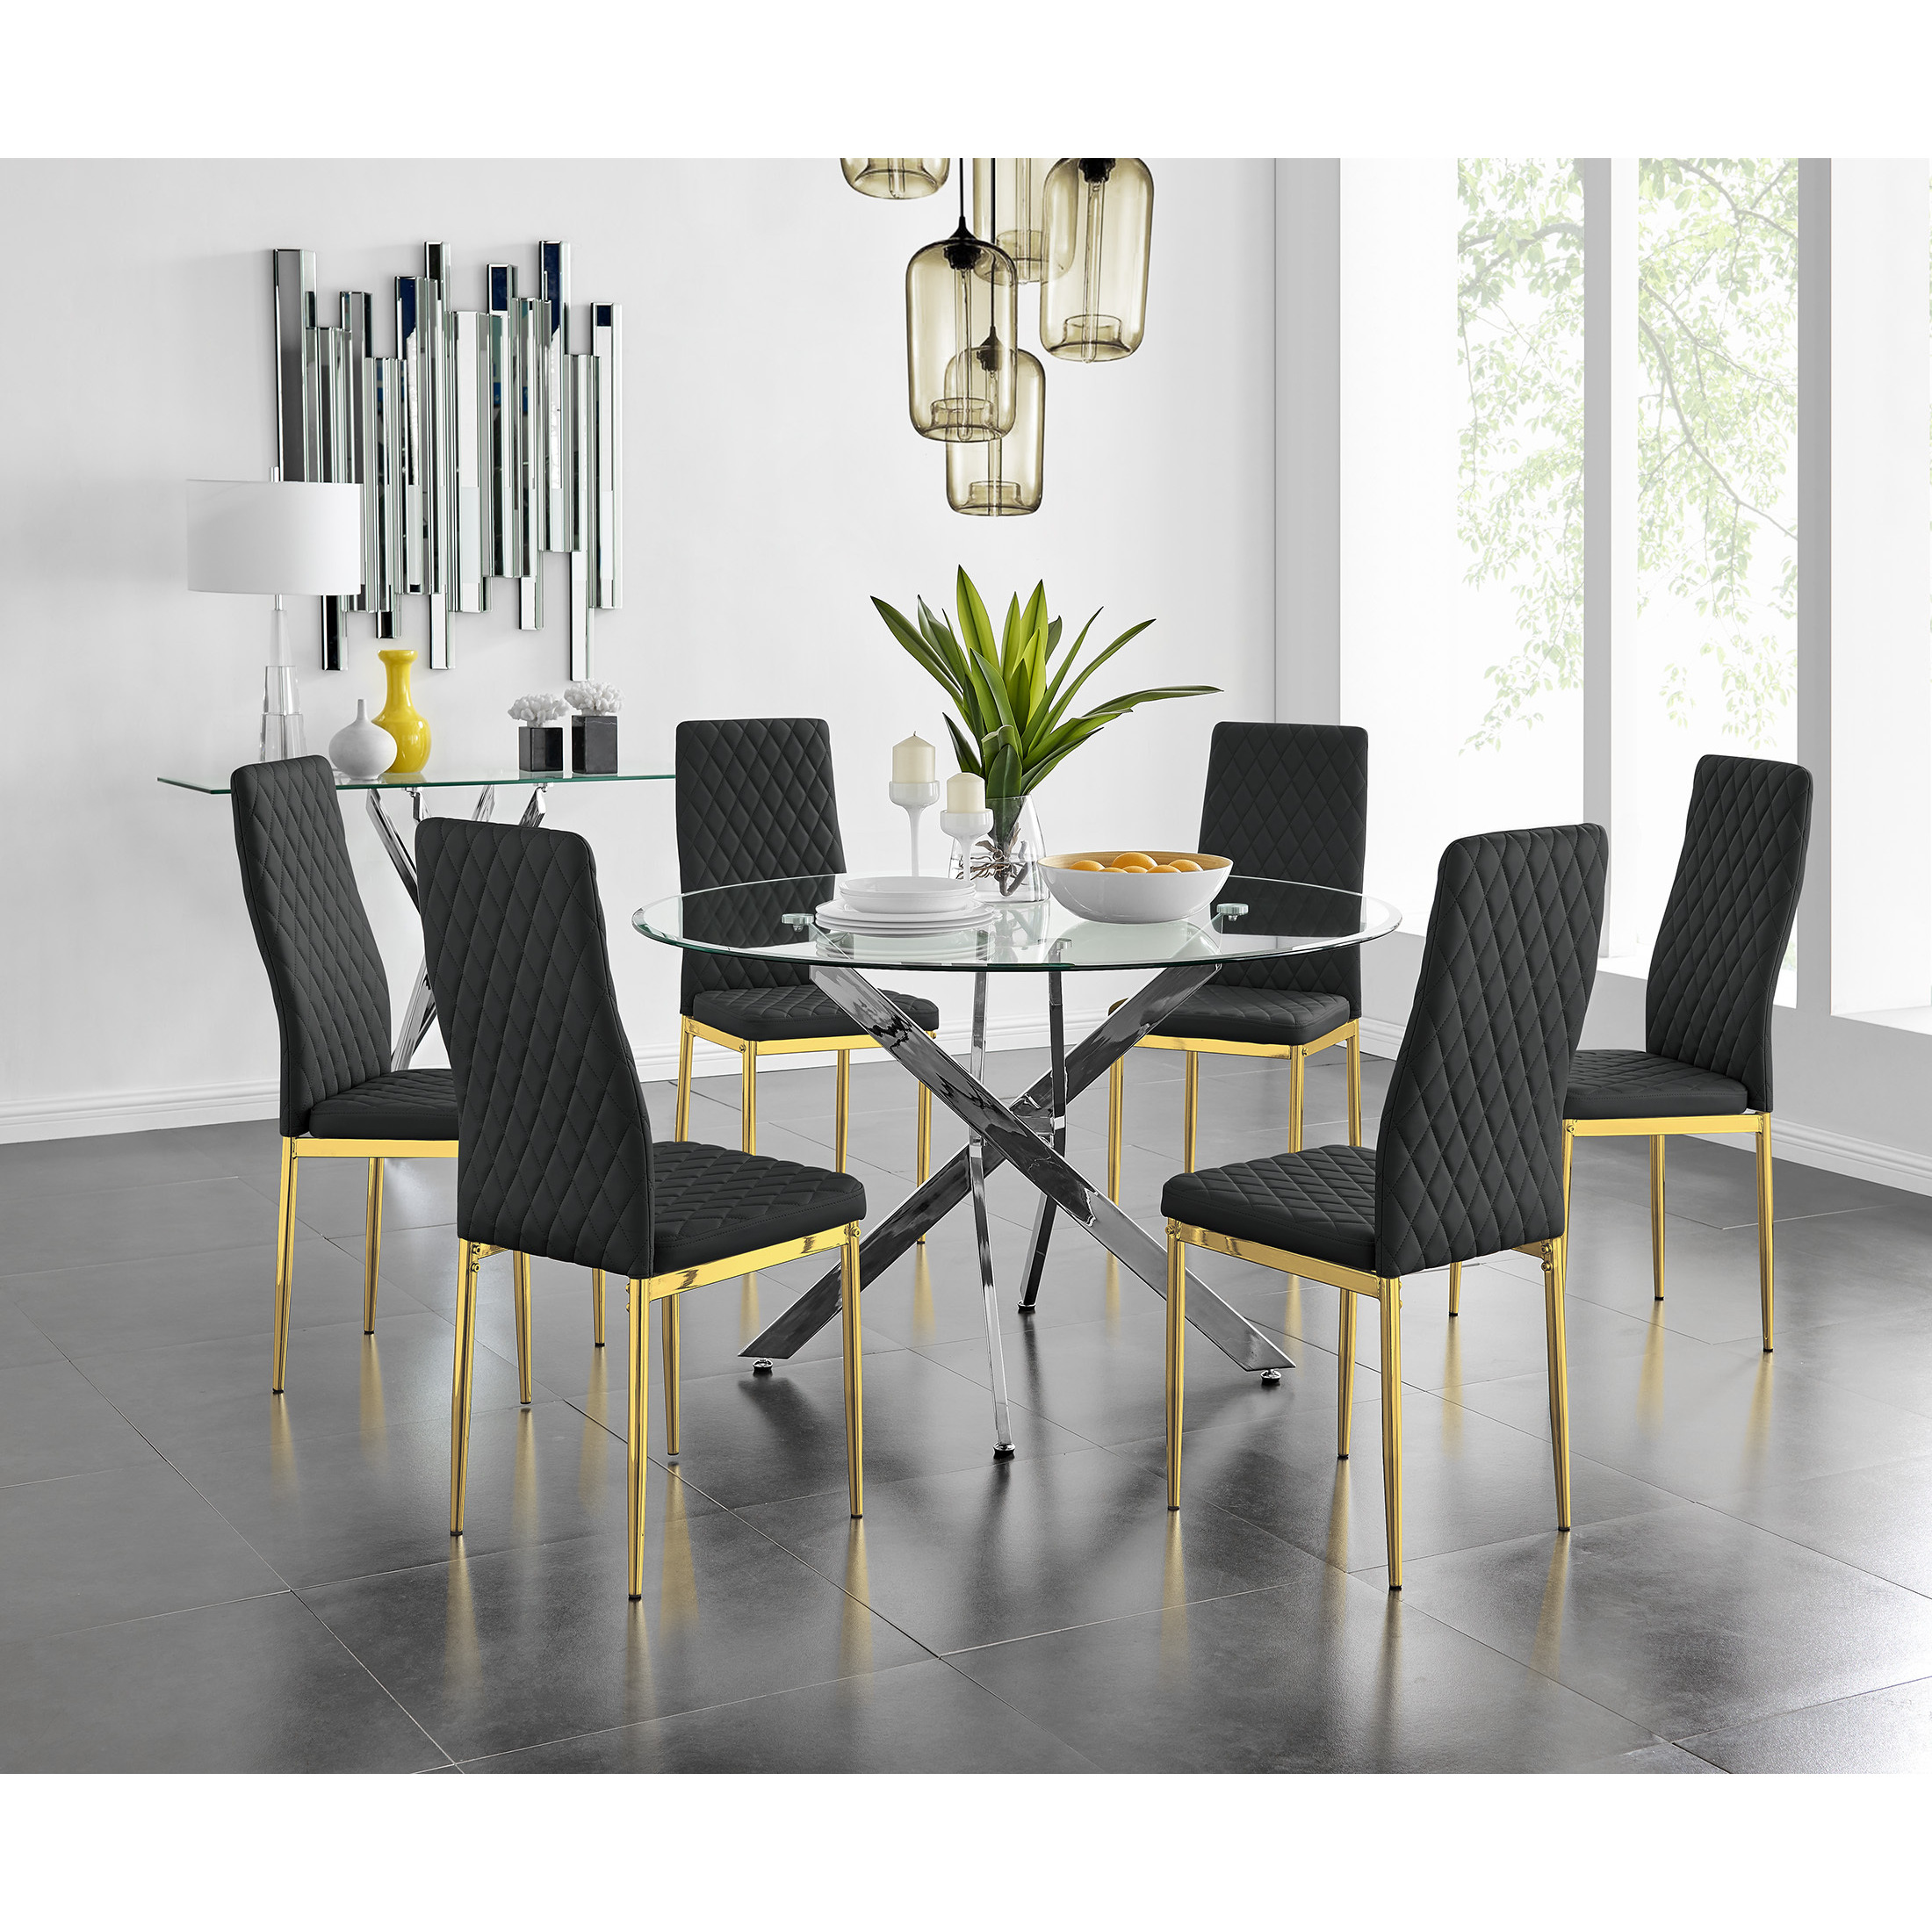 120cm Round Dining Table & 6 Gold Leg Chairs - Furniturebox